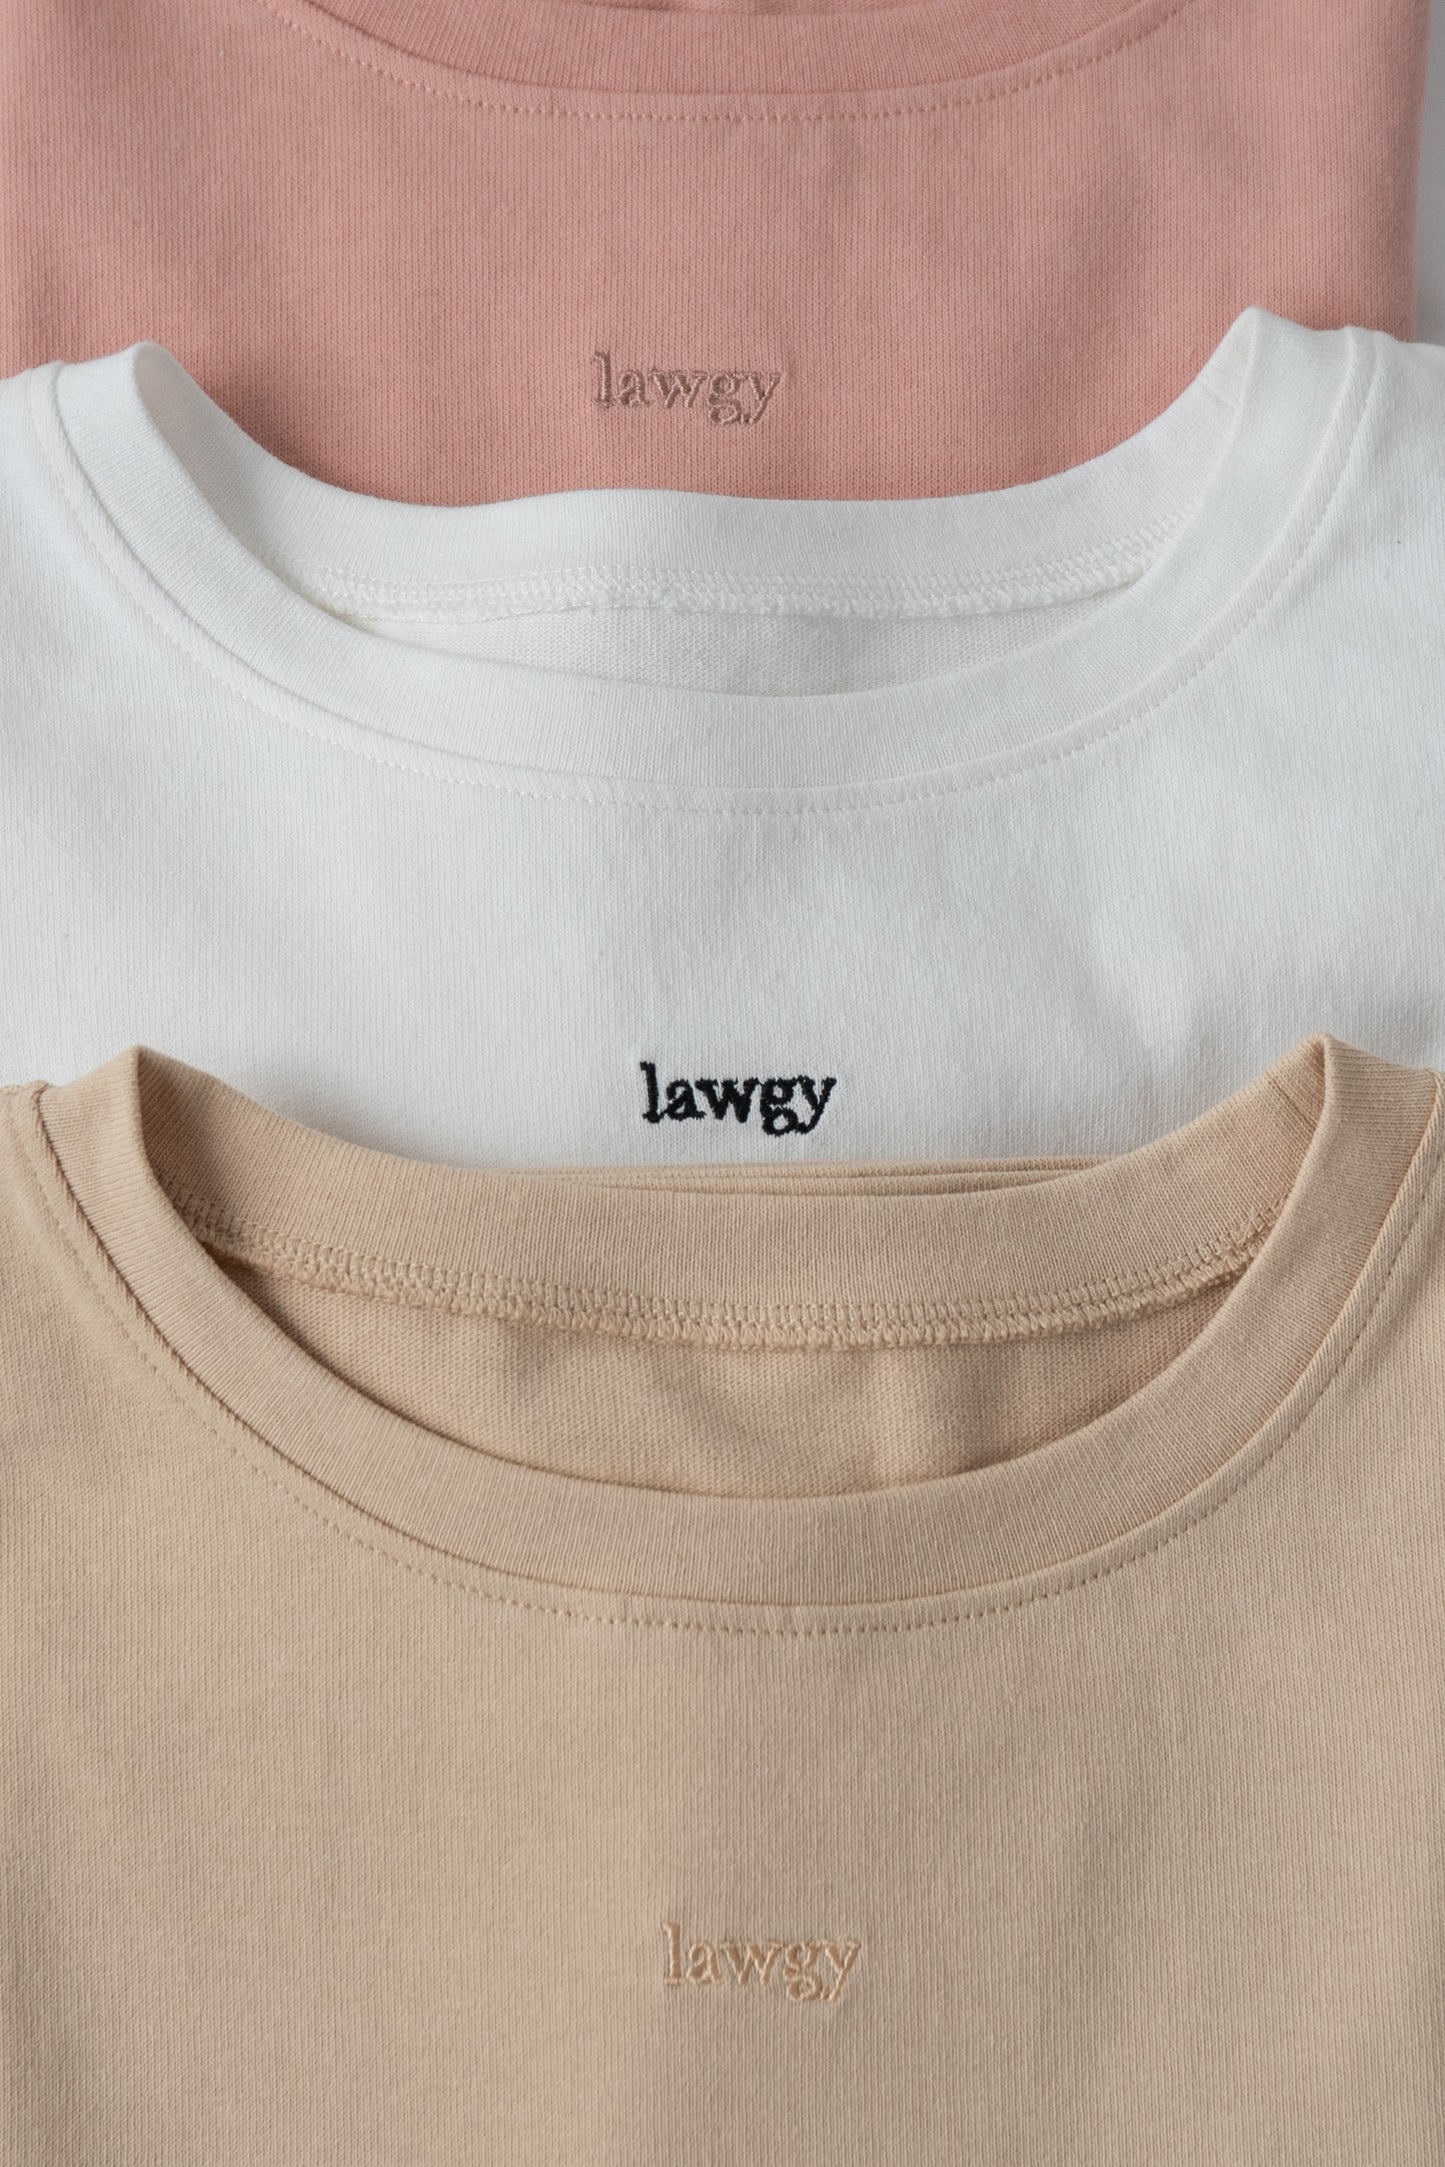 lawgy logo nuance long sleeve T